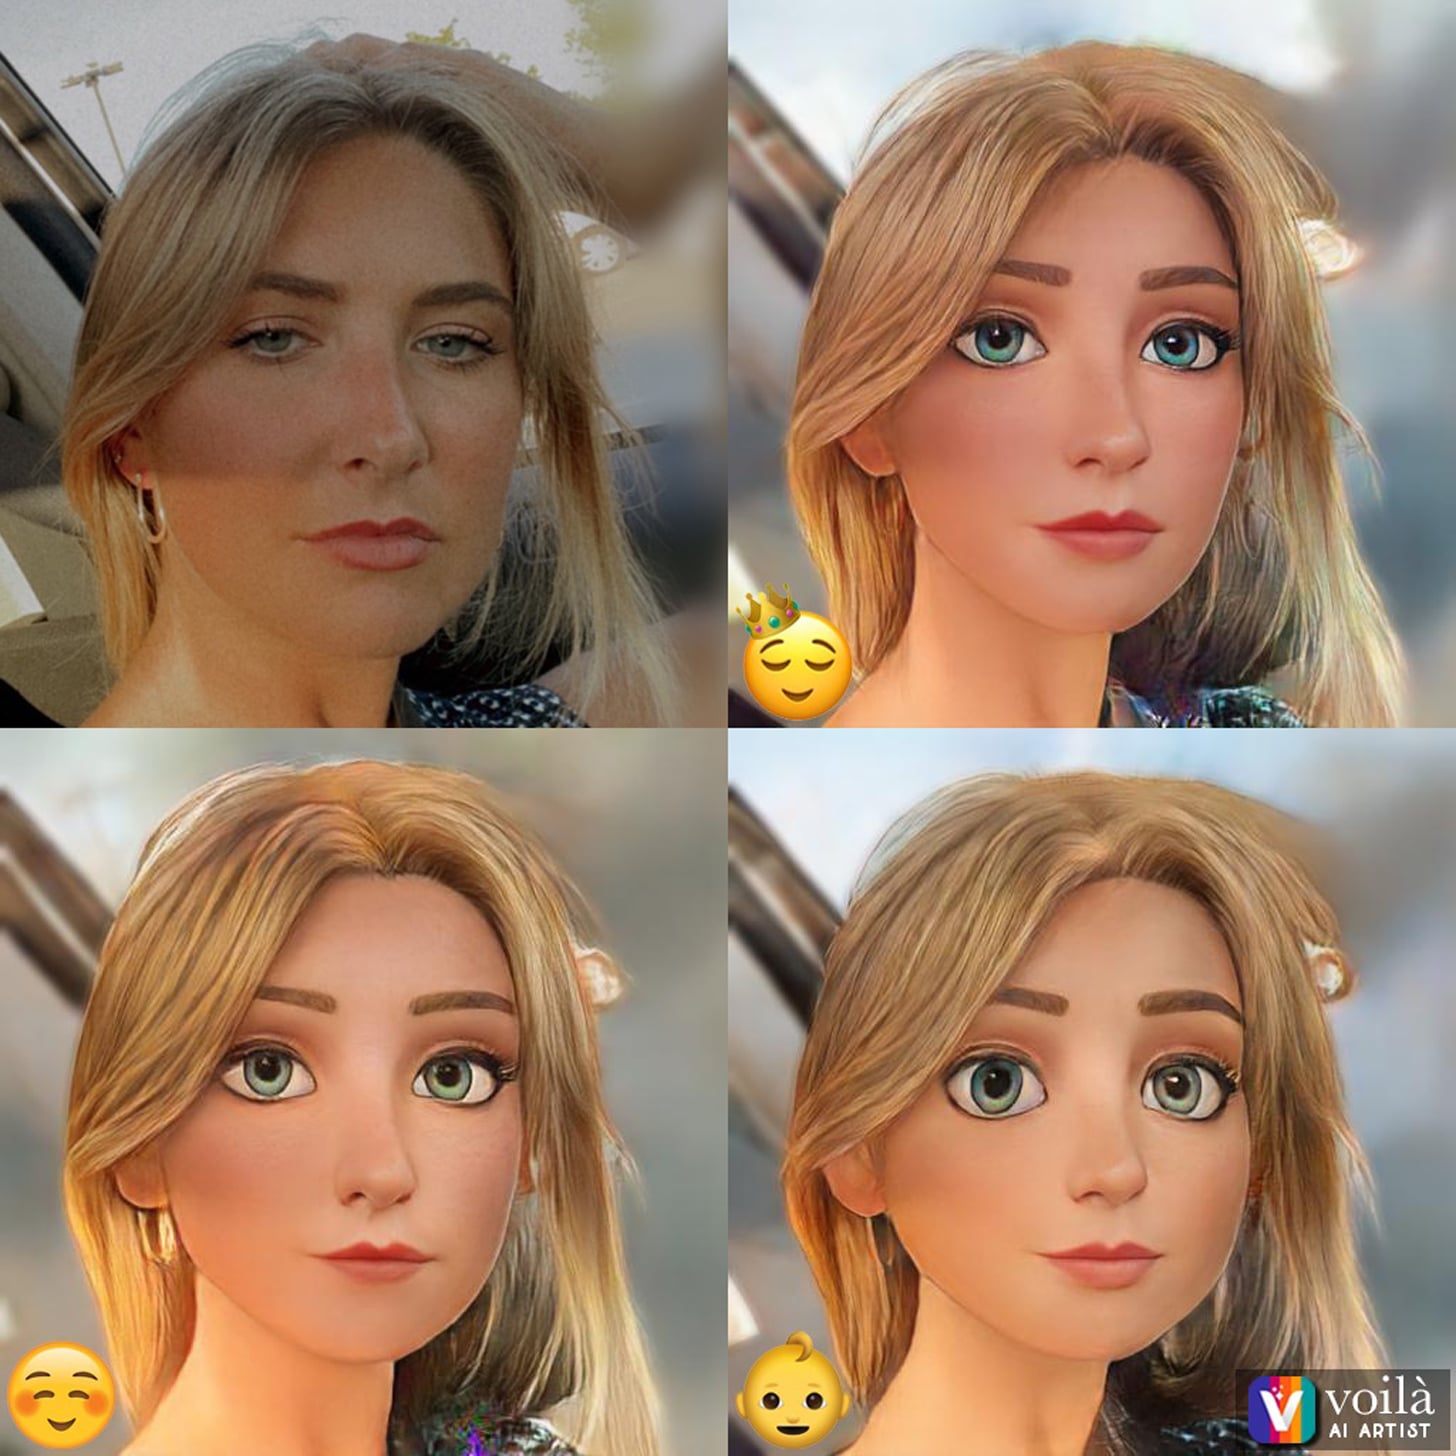 Disney Character Generators: Make Disney AI Characters [FREE, No Login]